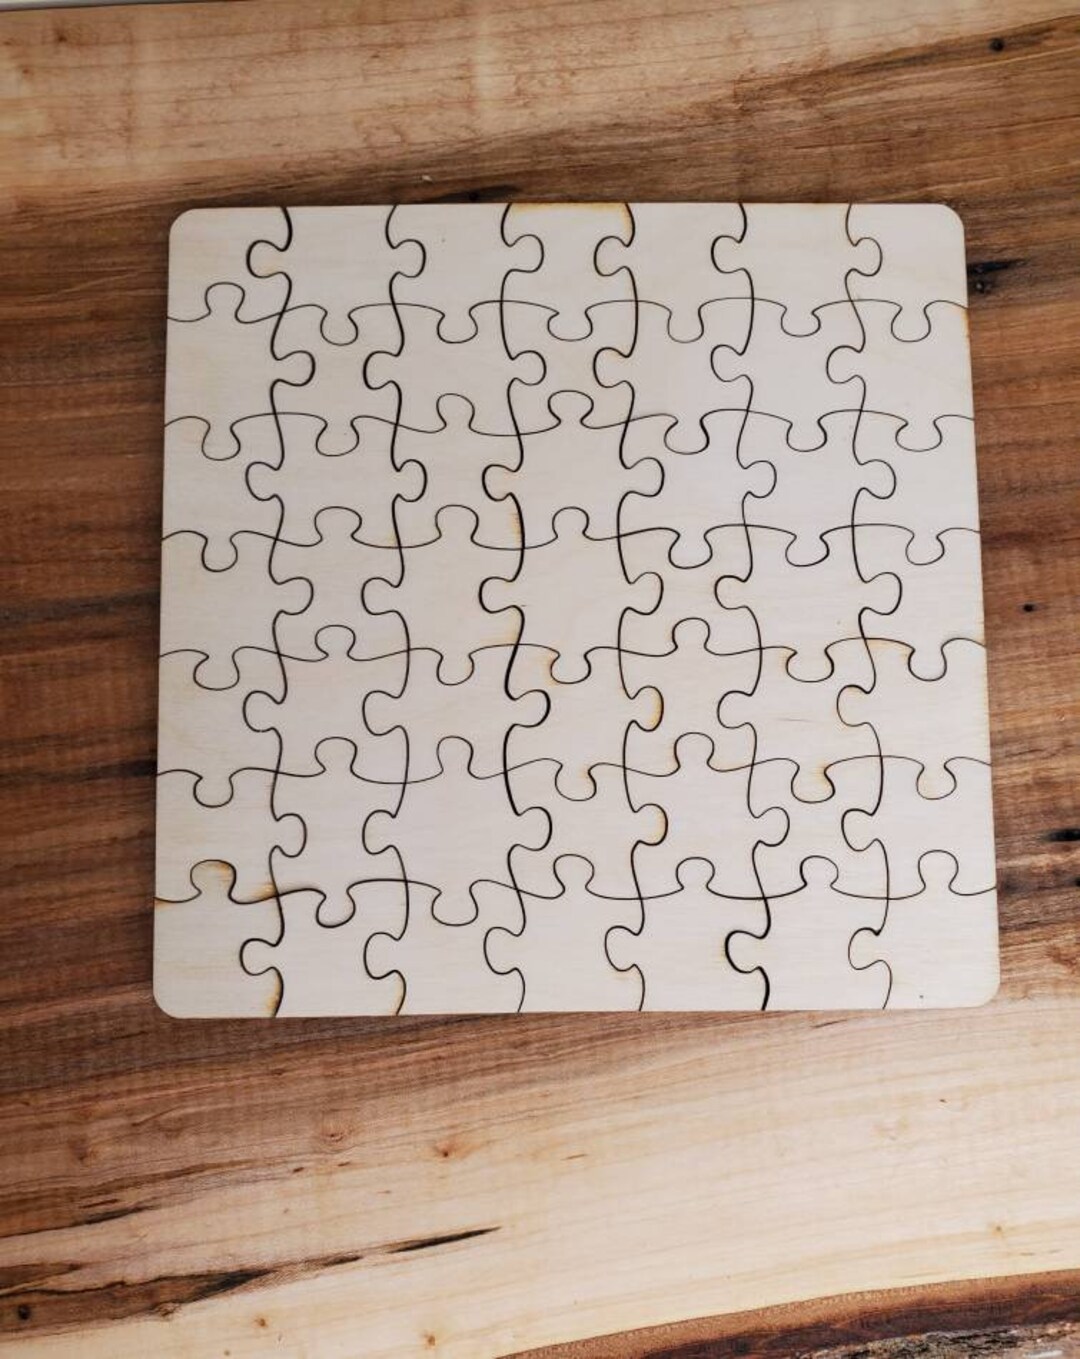 Acrylic Blank - Puzzle Piece